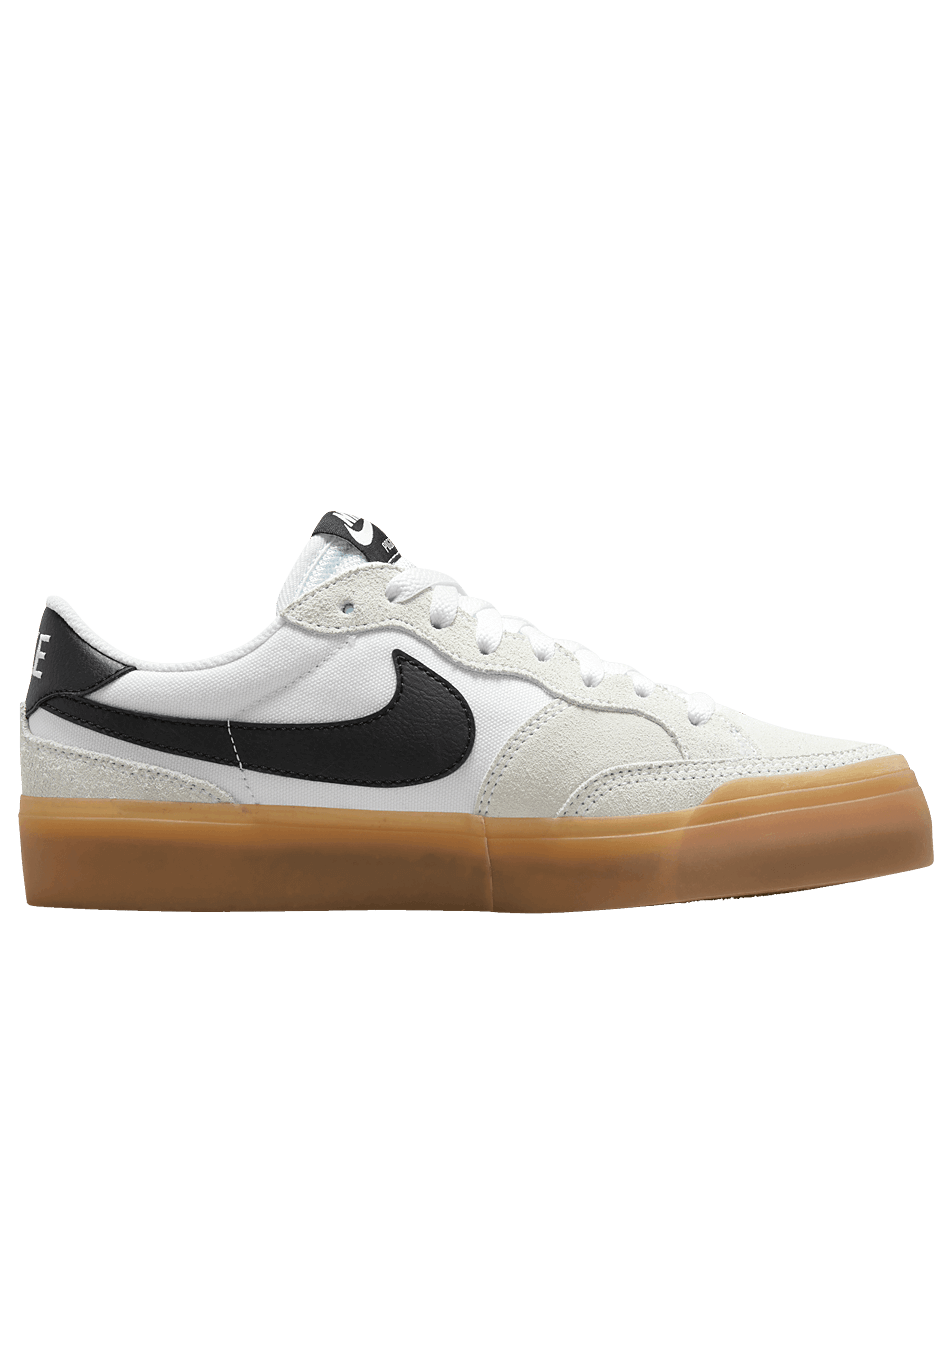 Nike SB Pogo Plus Skate Shoes White